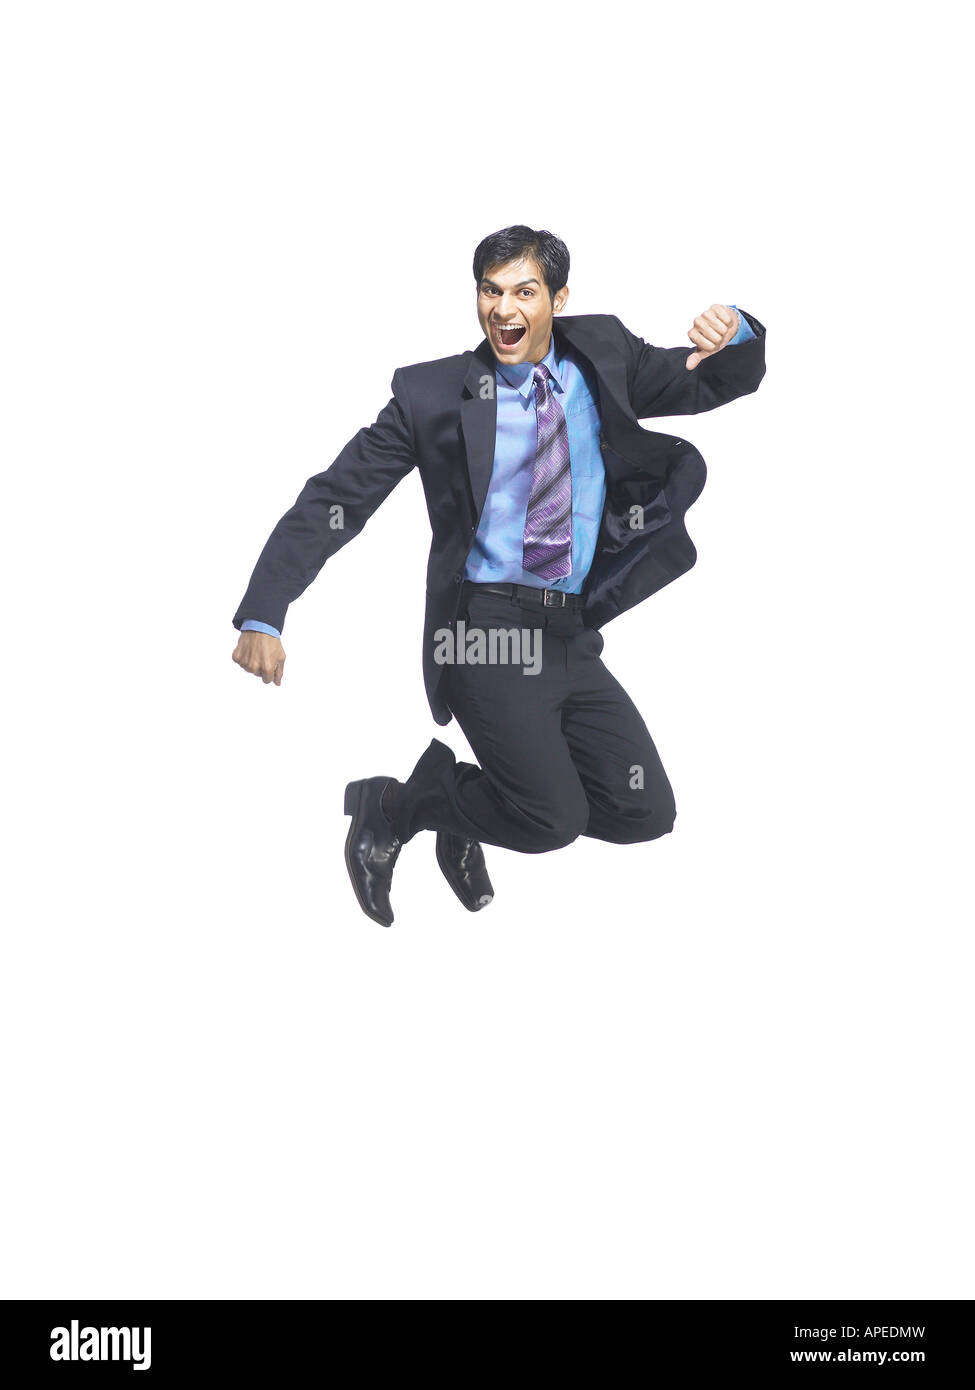 South Asian Indian executive man jumping with joy MR Stock Photo